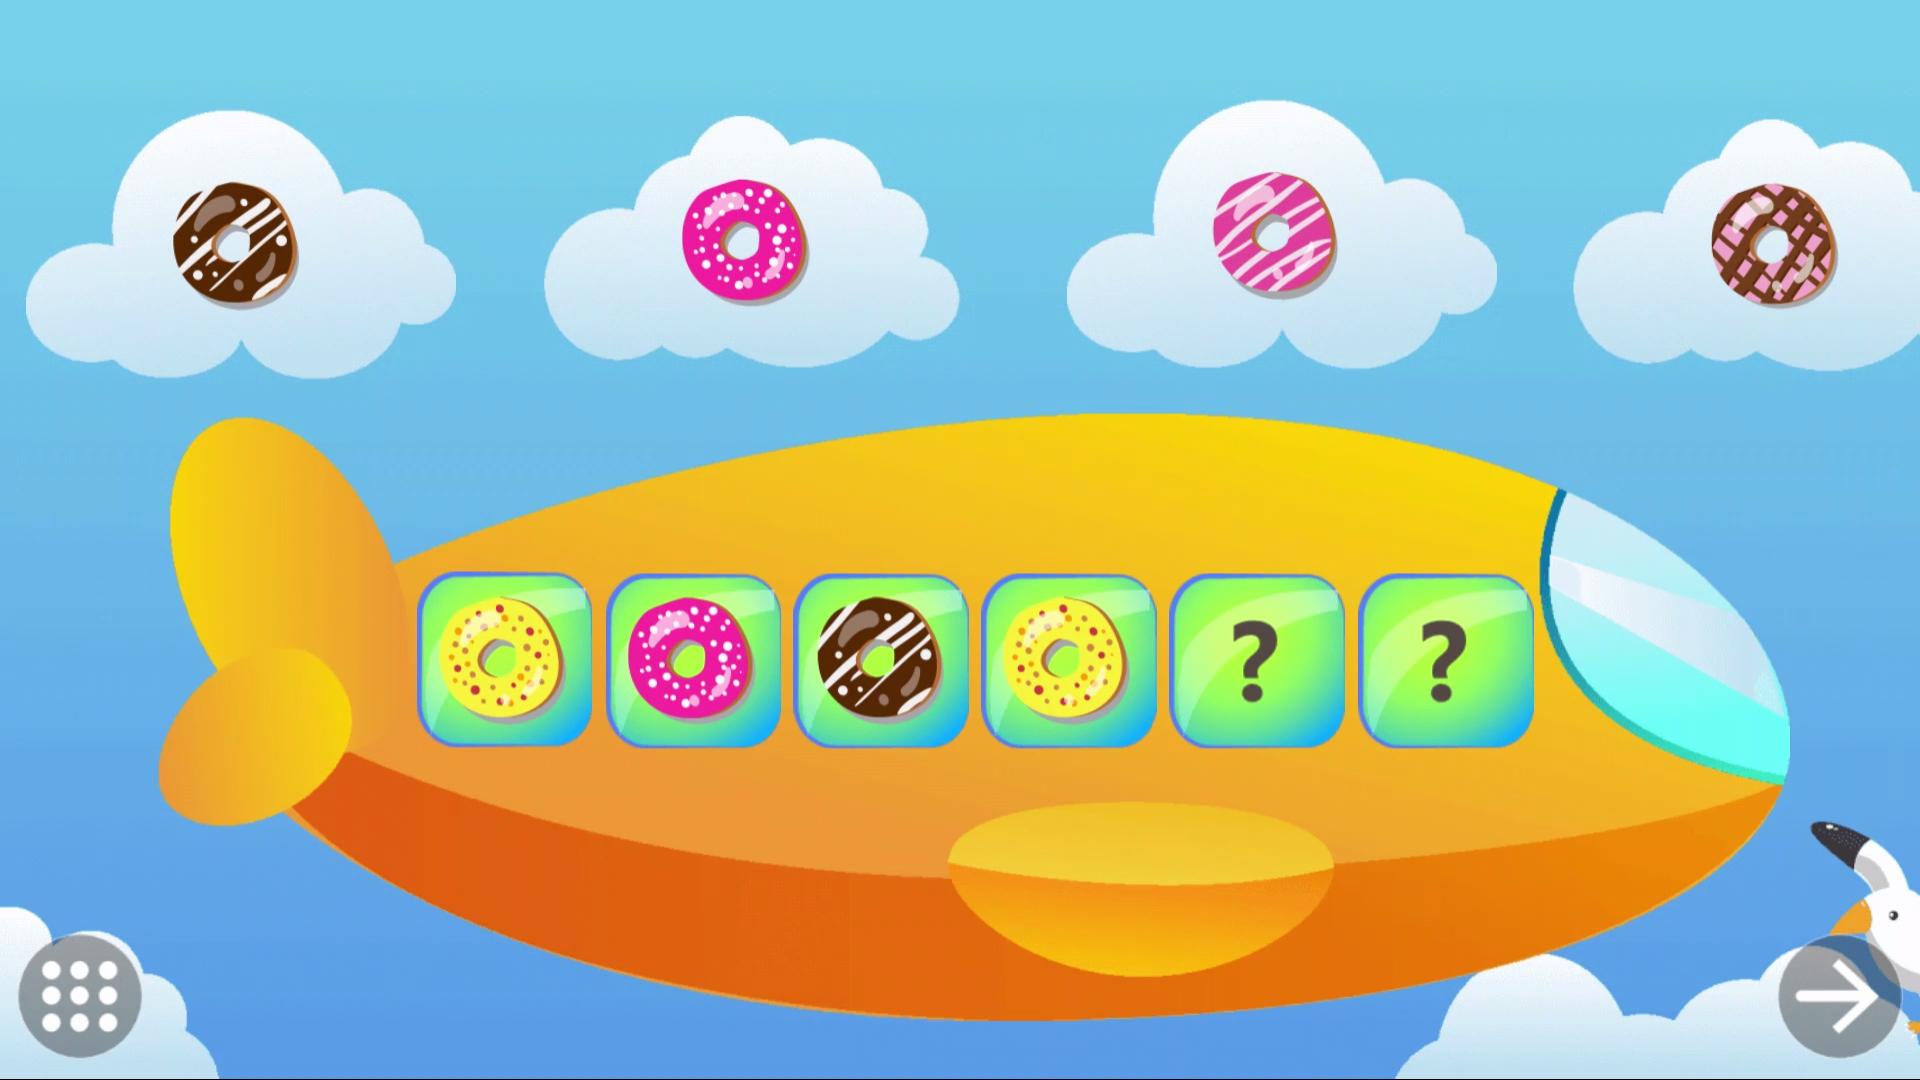 Kids Fun Learning - Educational Cool Math Games 1.0.2.0 Screenshot 2